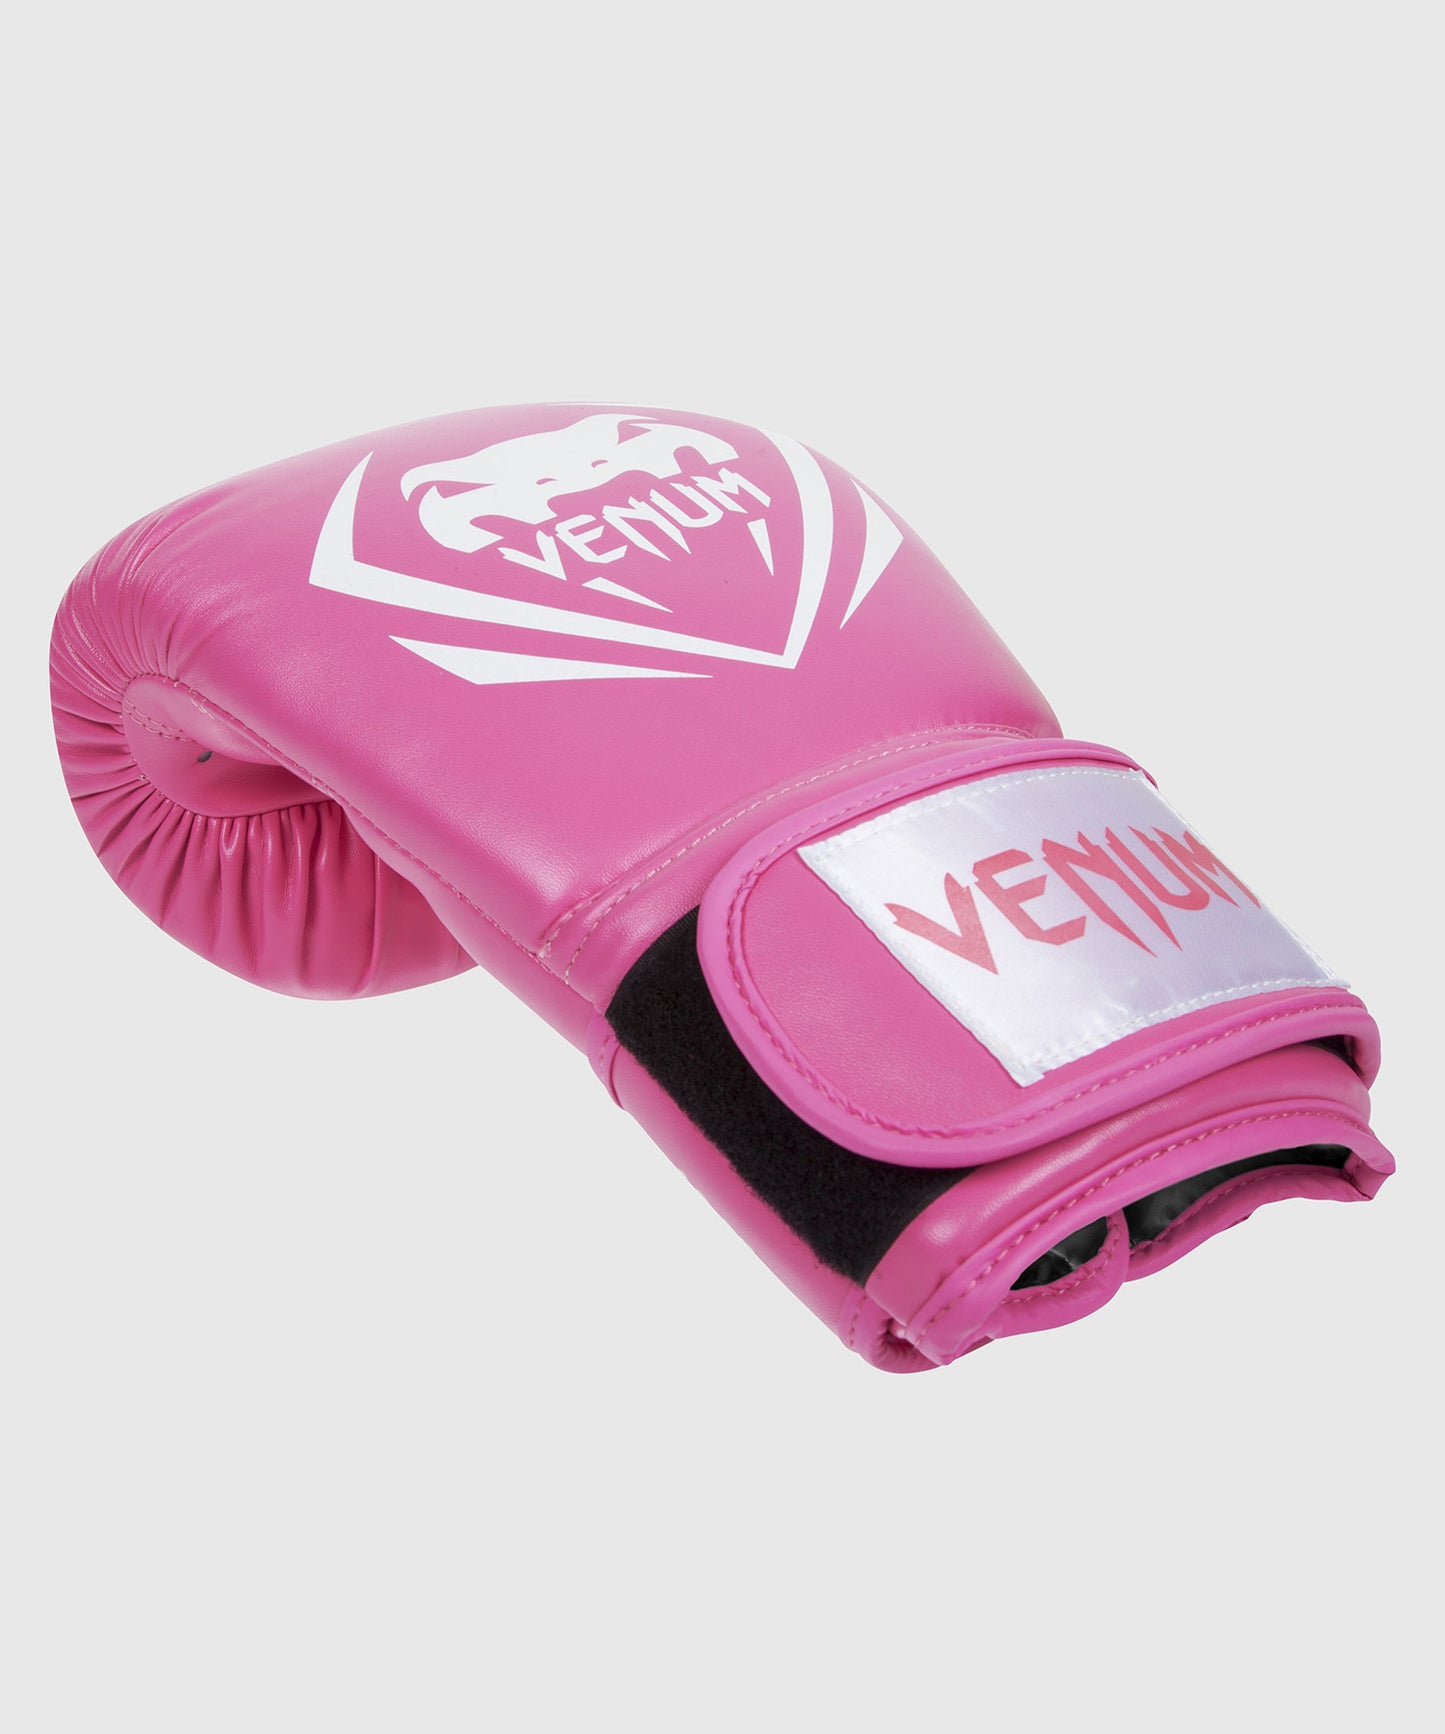 Venum Contender Boxhandschuhe - Rosa